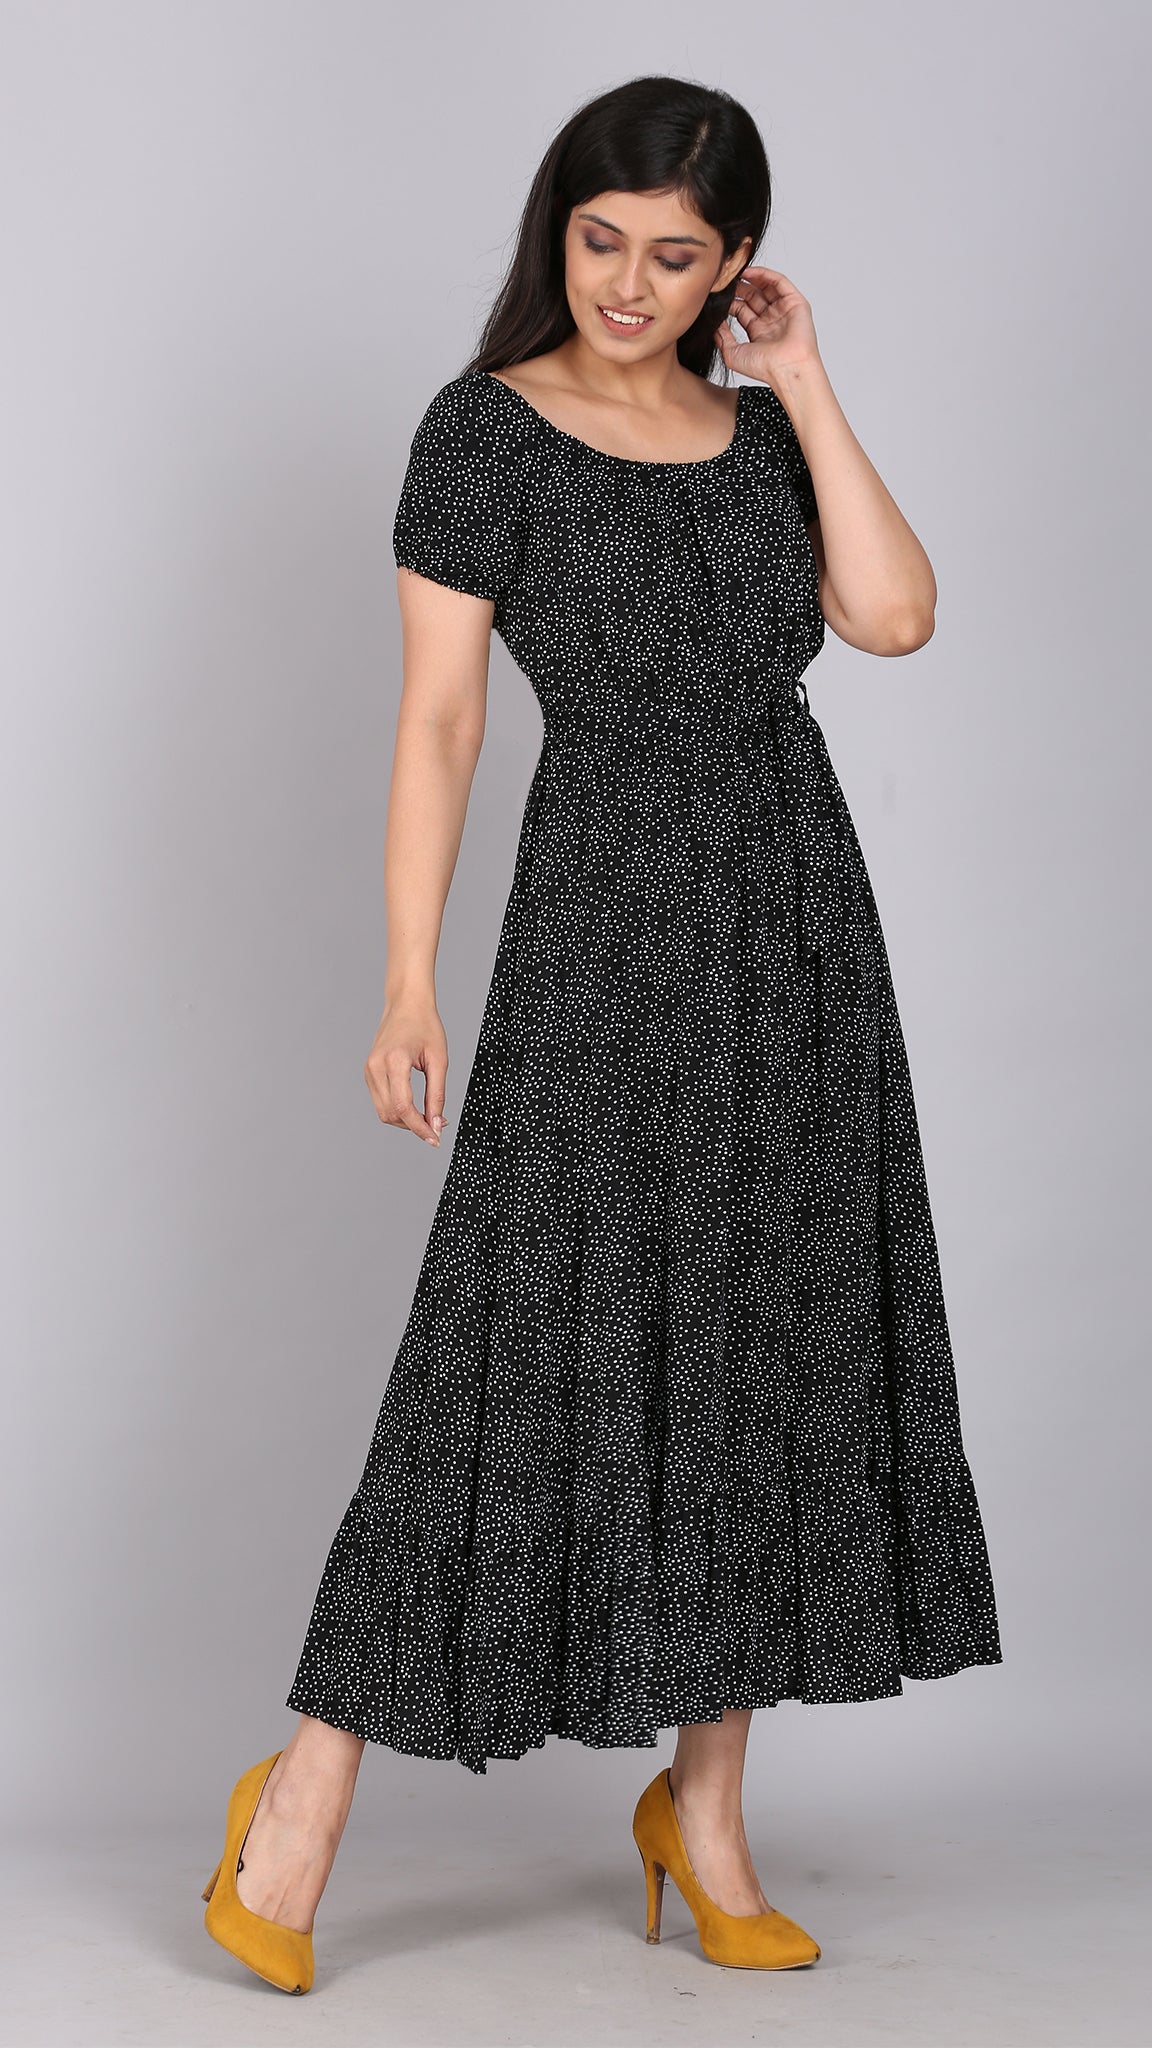 Aggregate more than 125 black polka dot dress best